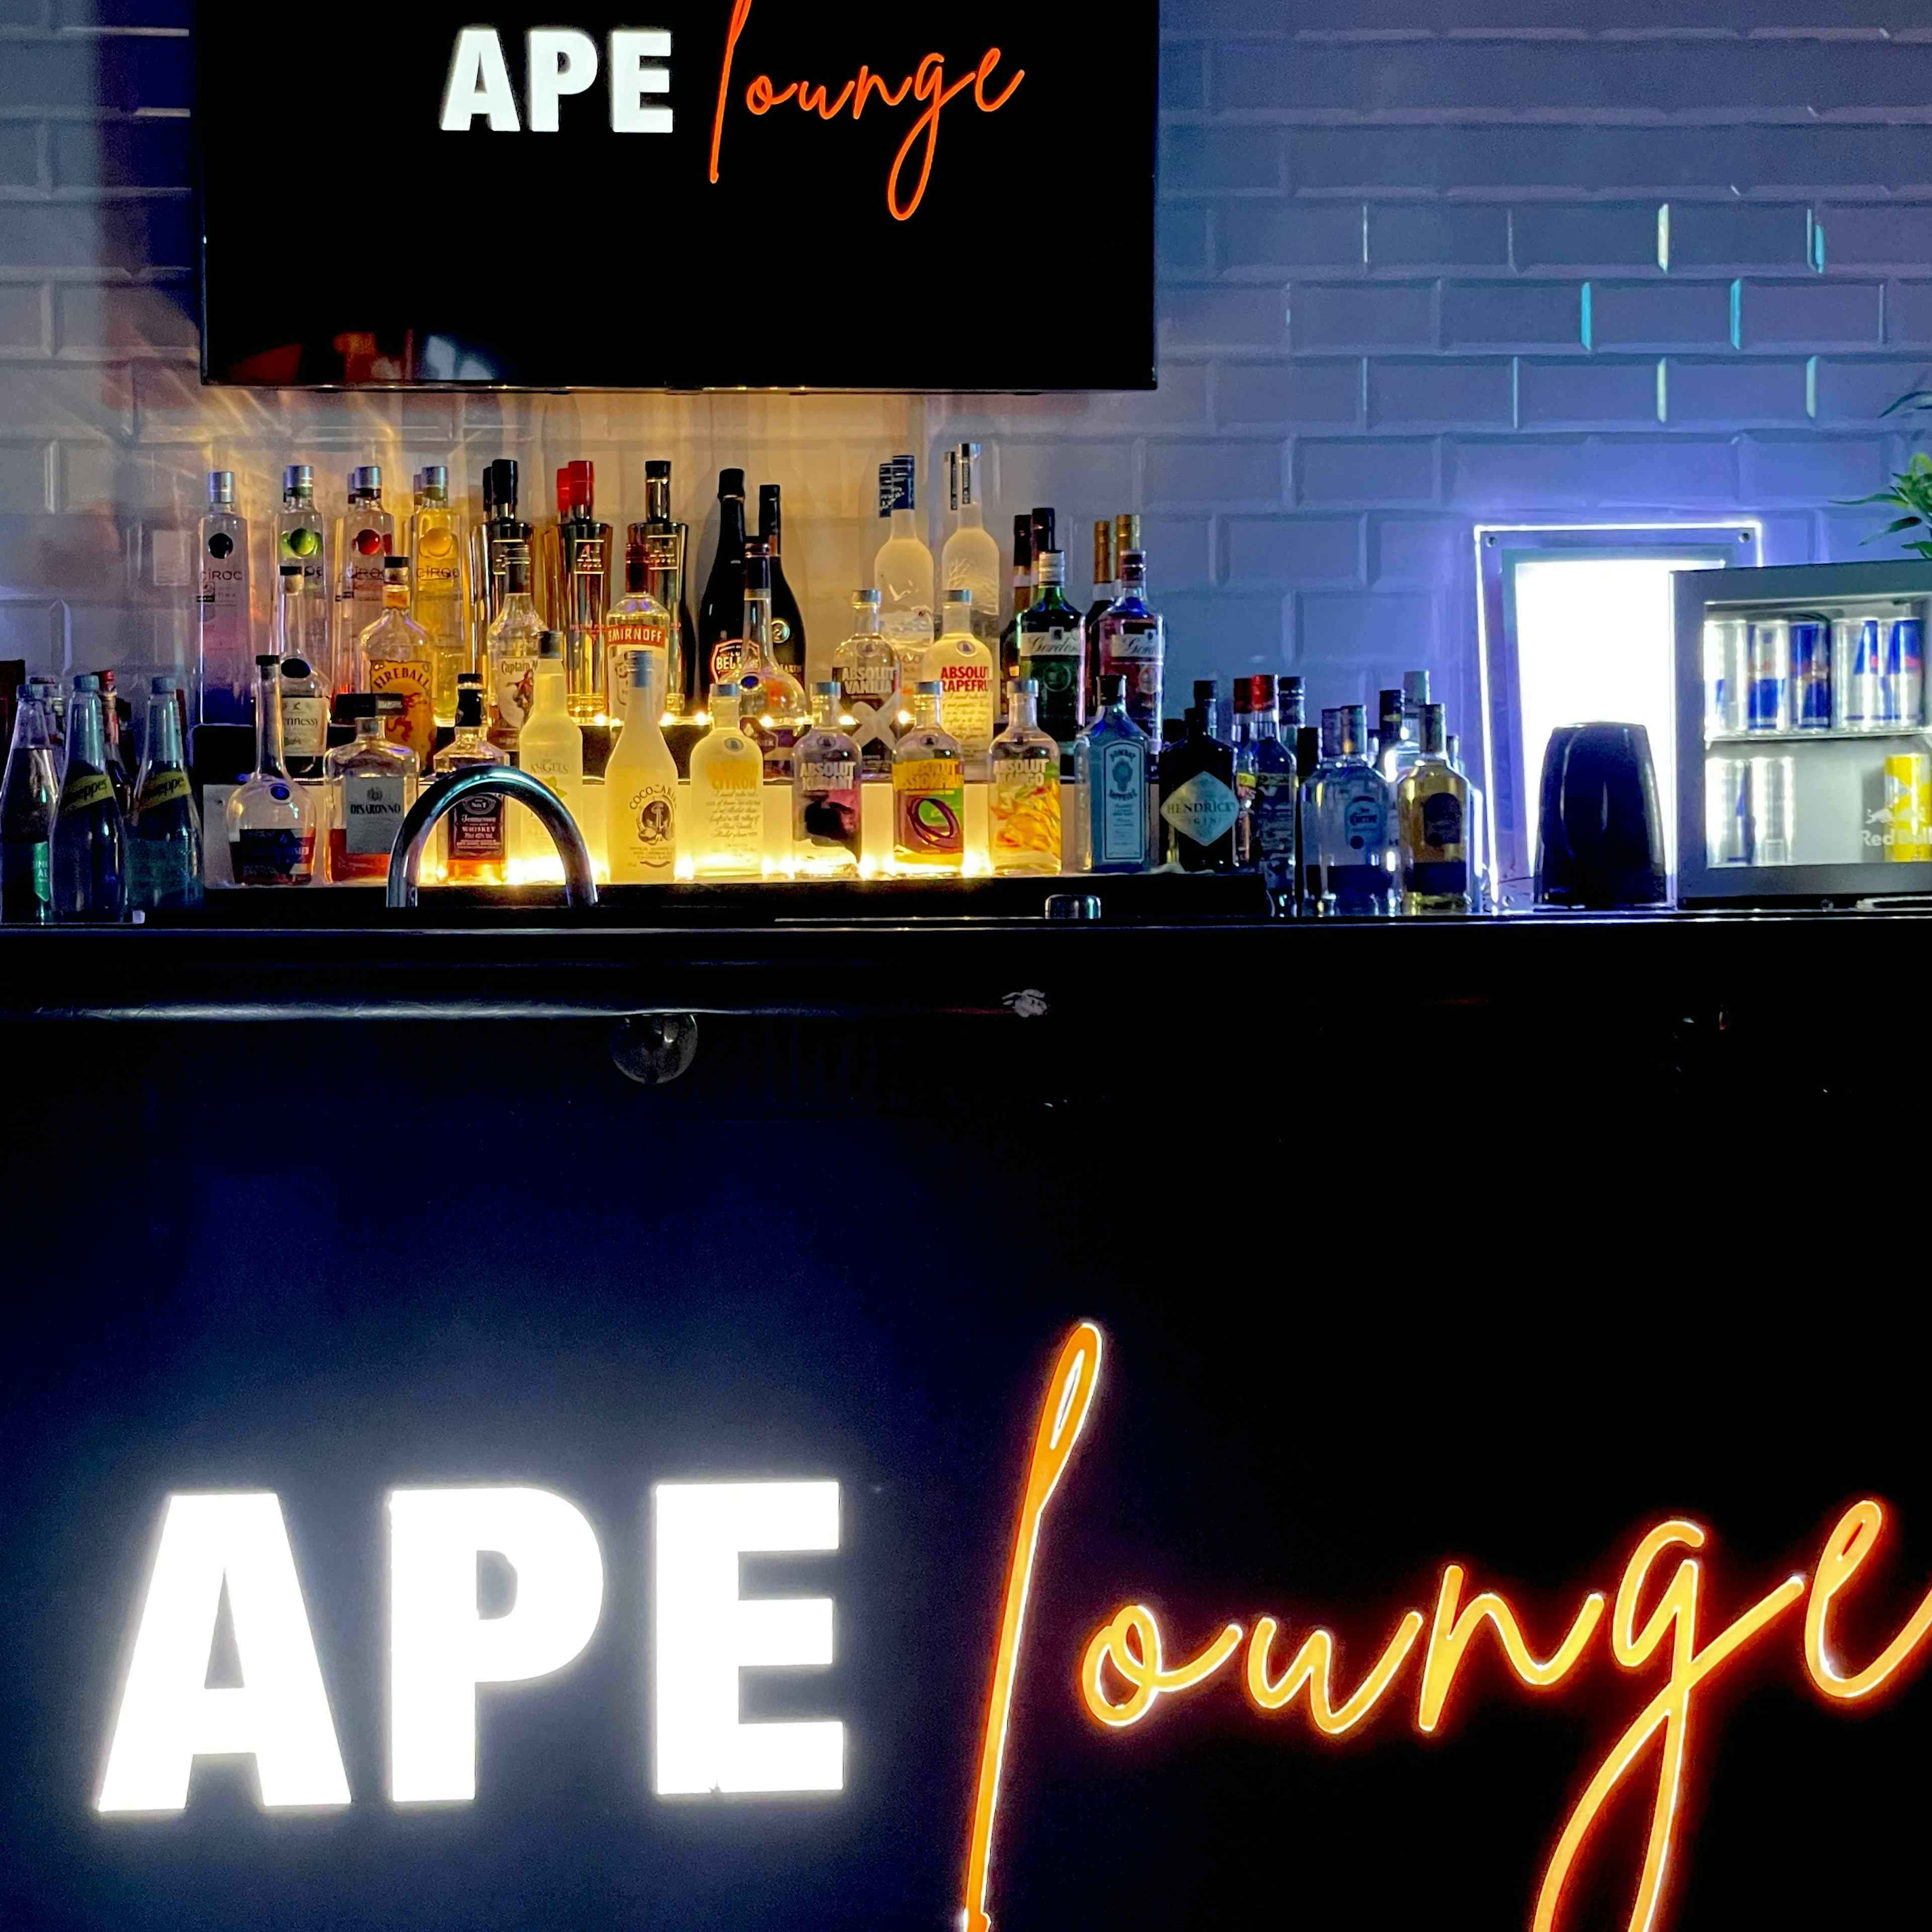 Ape Lounge - Cocktail Bar image 2